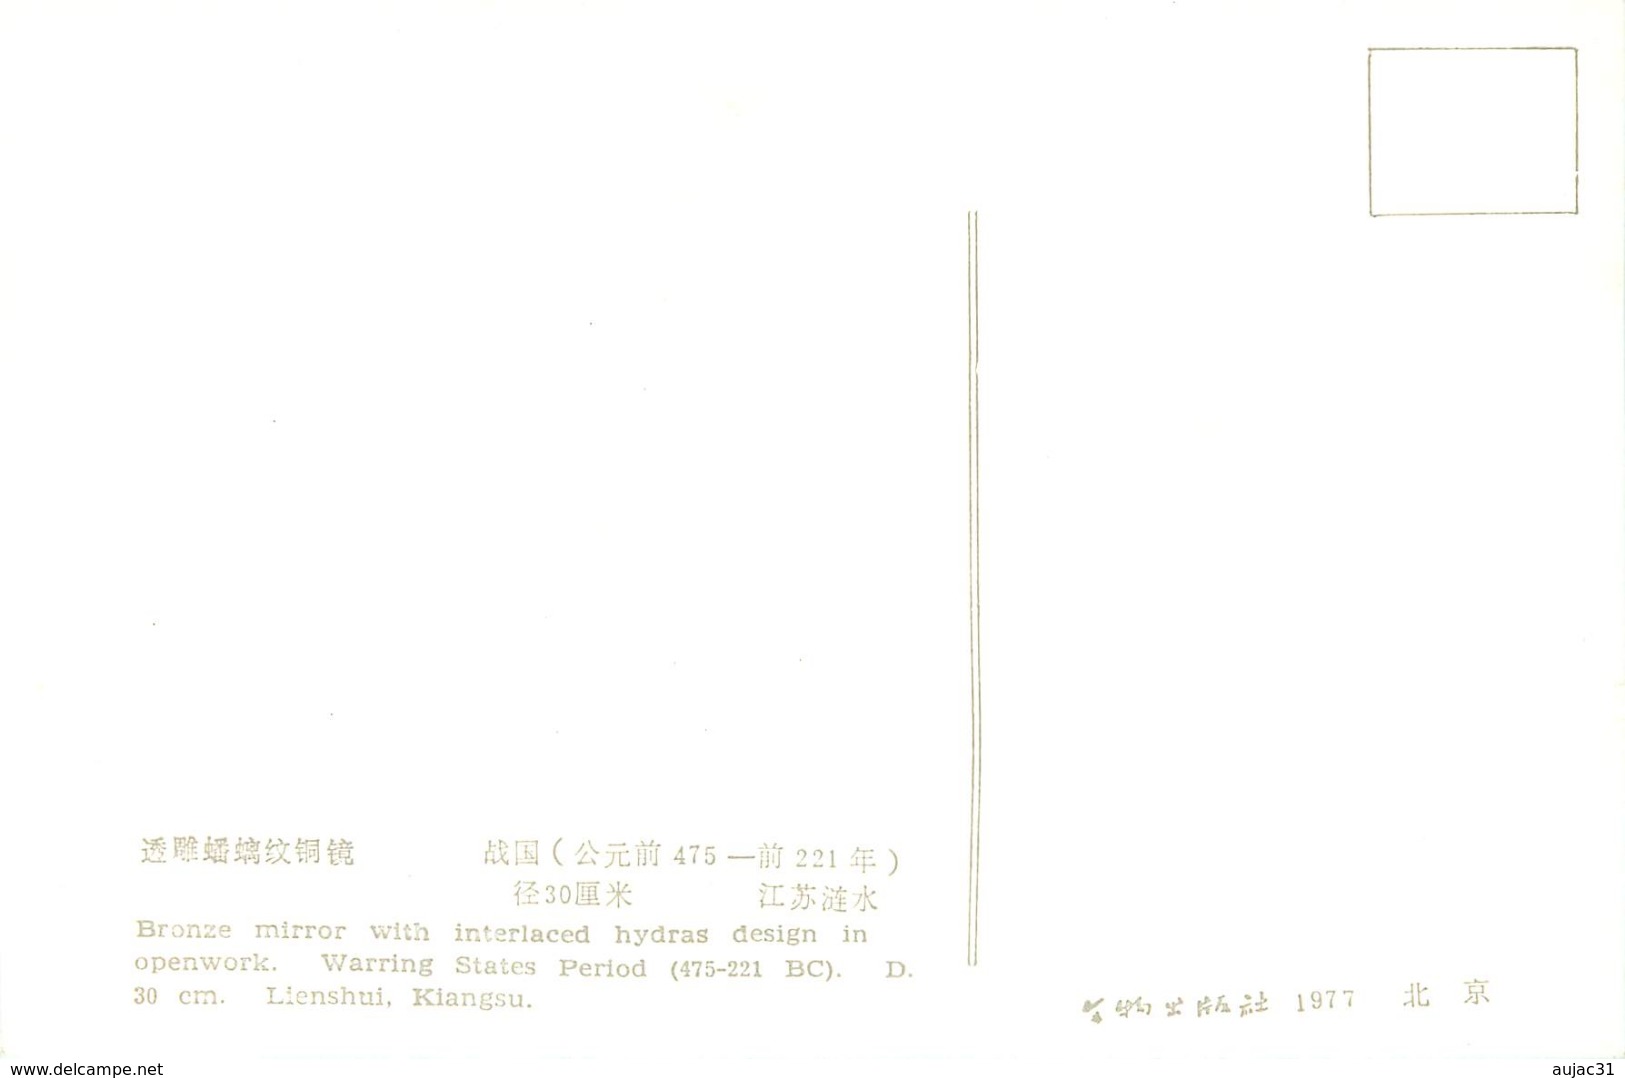 Chine - China - Kiangsu - Jiangsu - Arts - Art - Bronzes - 10 cartes avec pochette - Semi moderne grand format -bon état